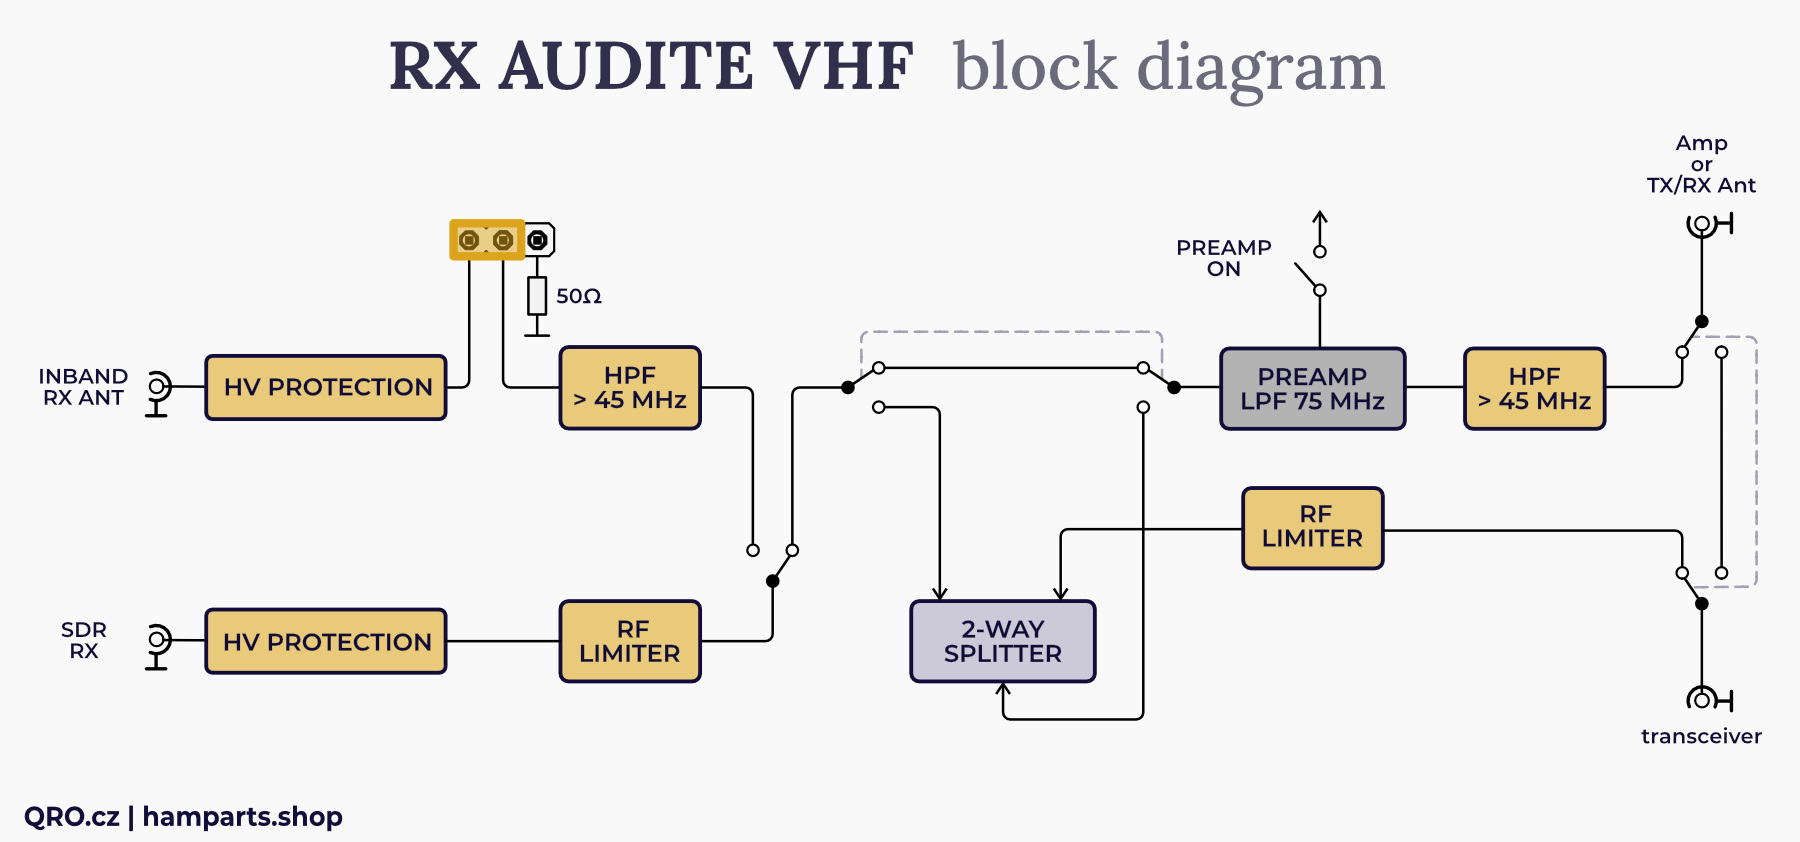 rx audite vhf block diagram by qro.cz hamparts.shop